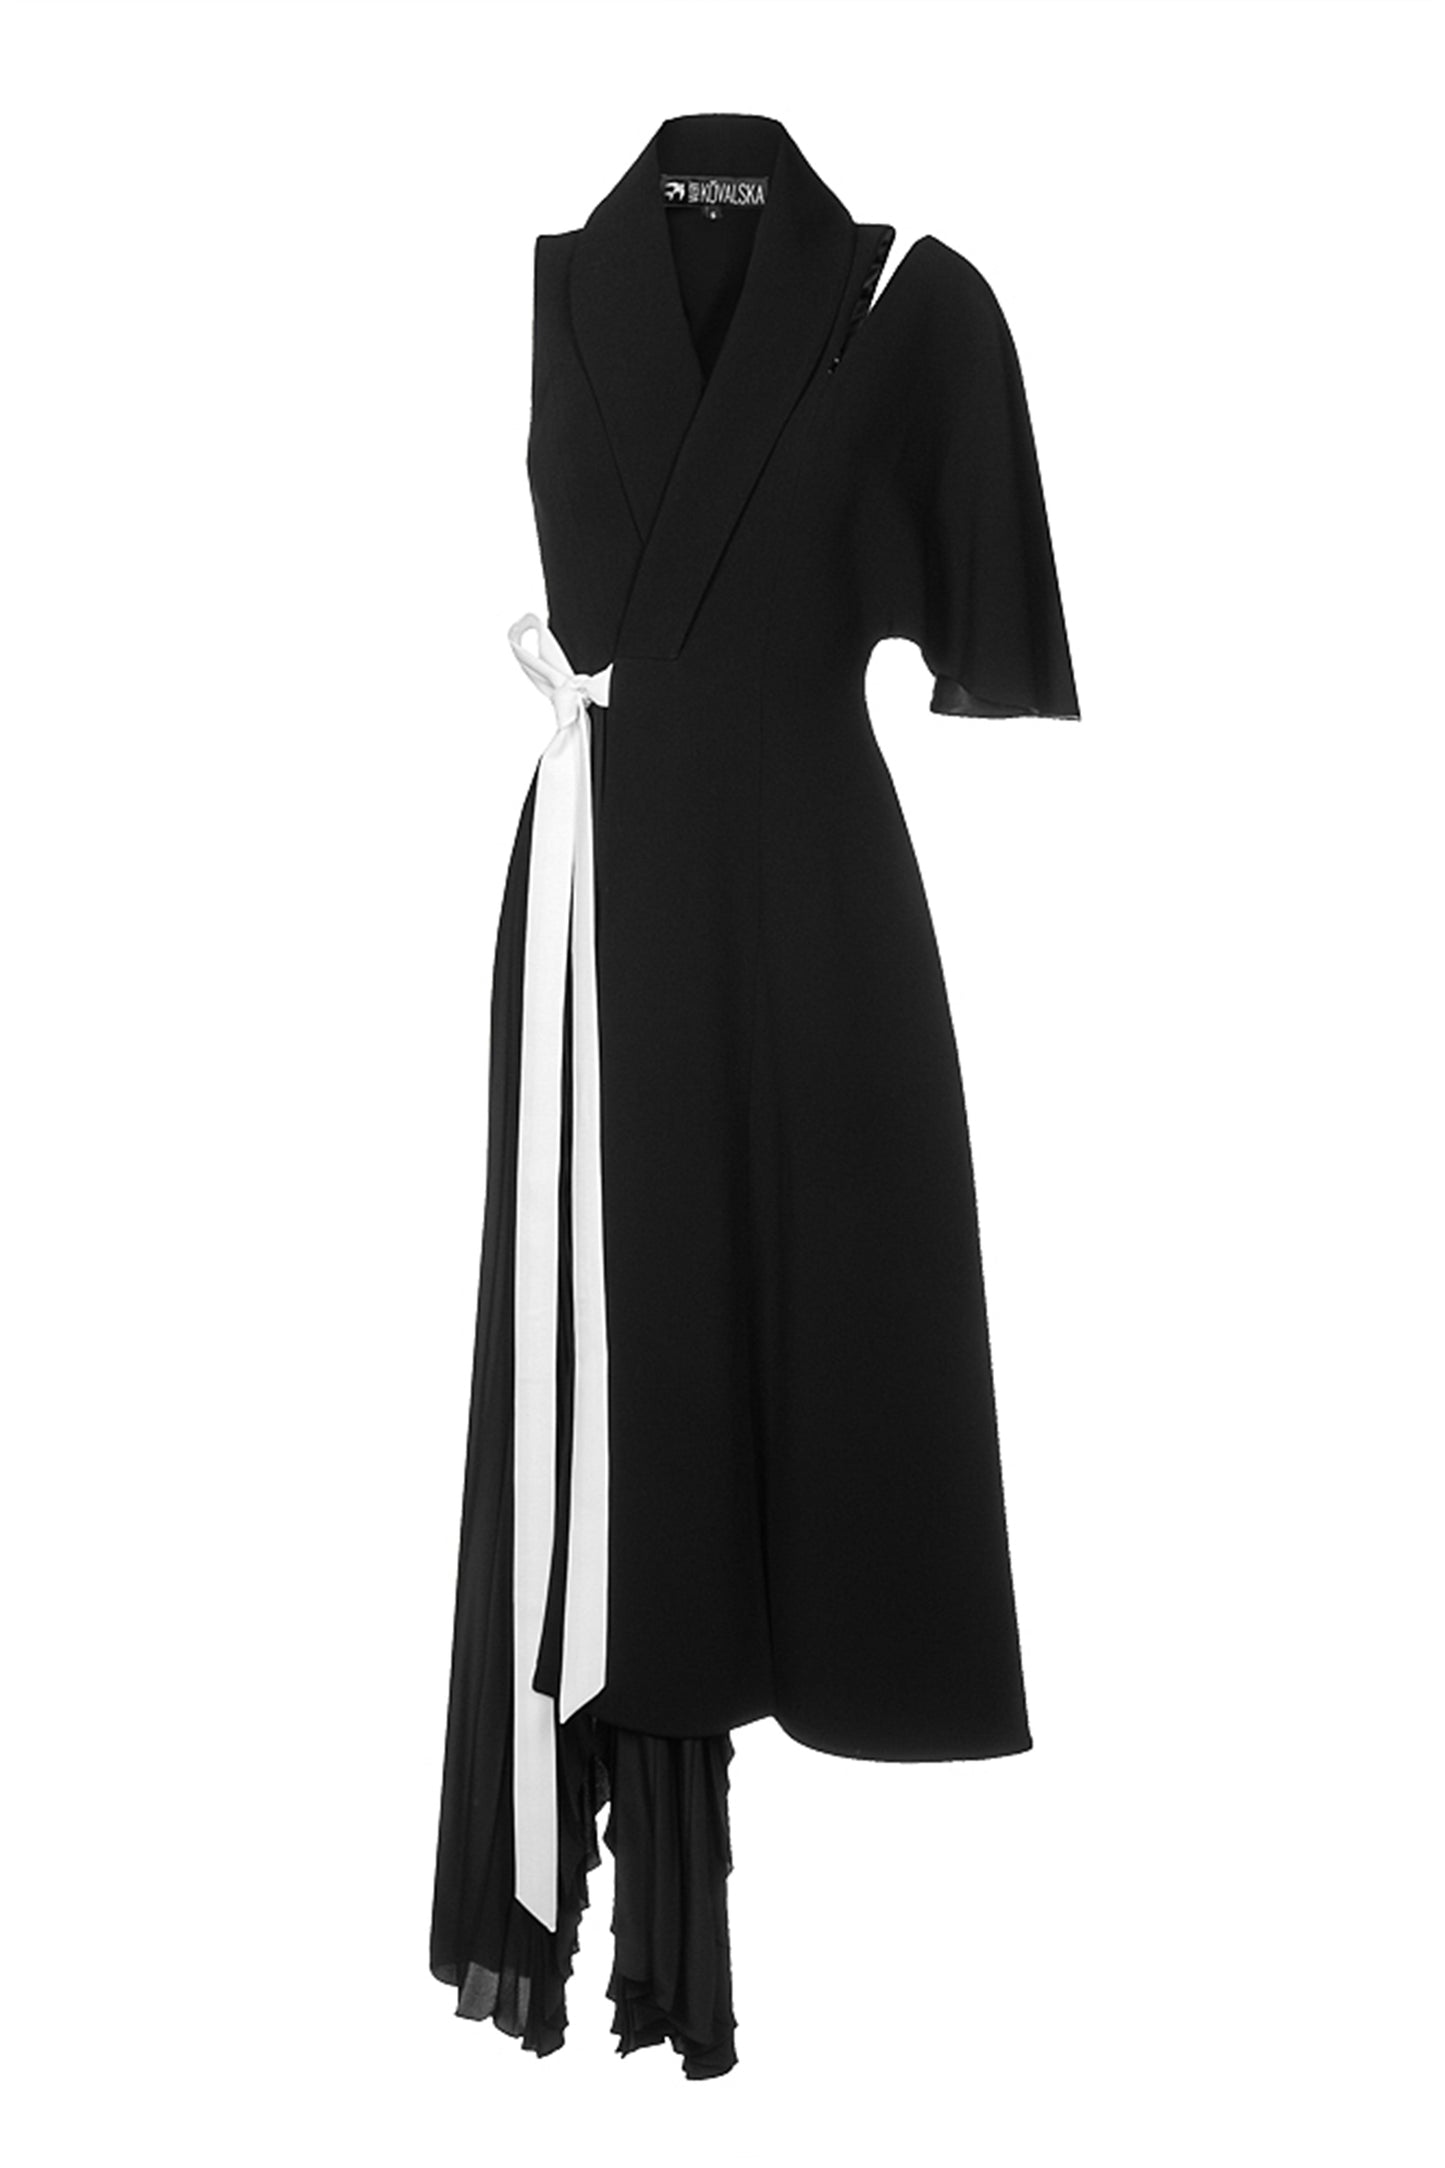 Black pleated side dress VALERY KOVALSKA